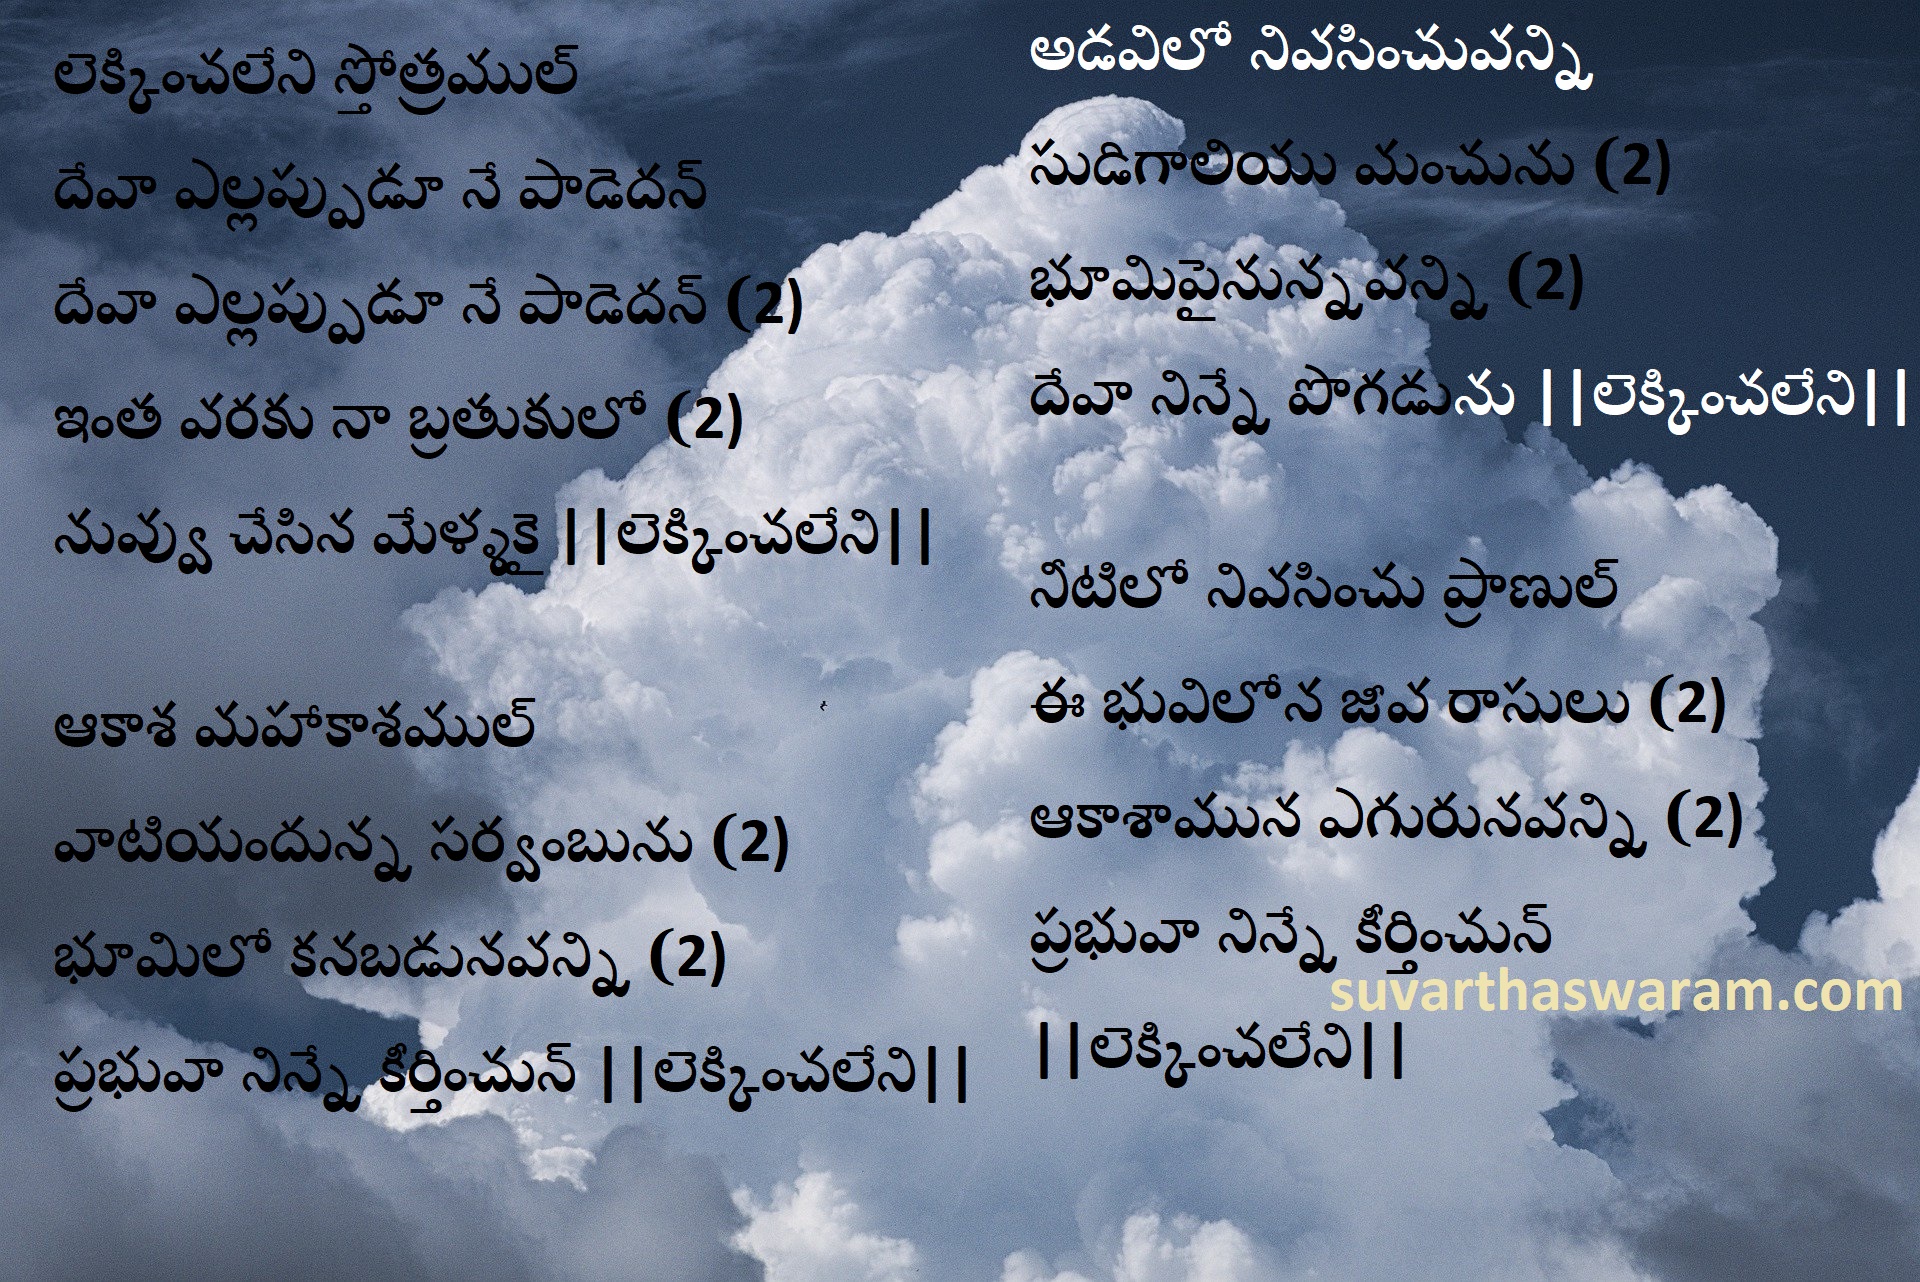 Lekkinchaleni Sthothramul Lyrics Chords Telugu Tamil